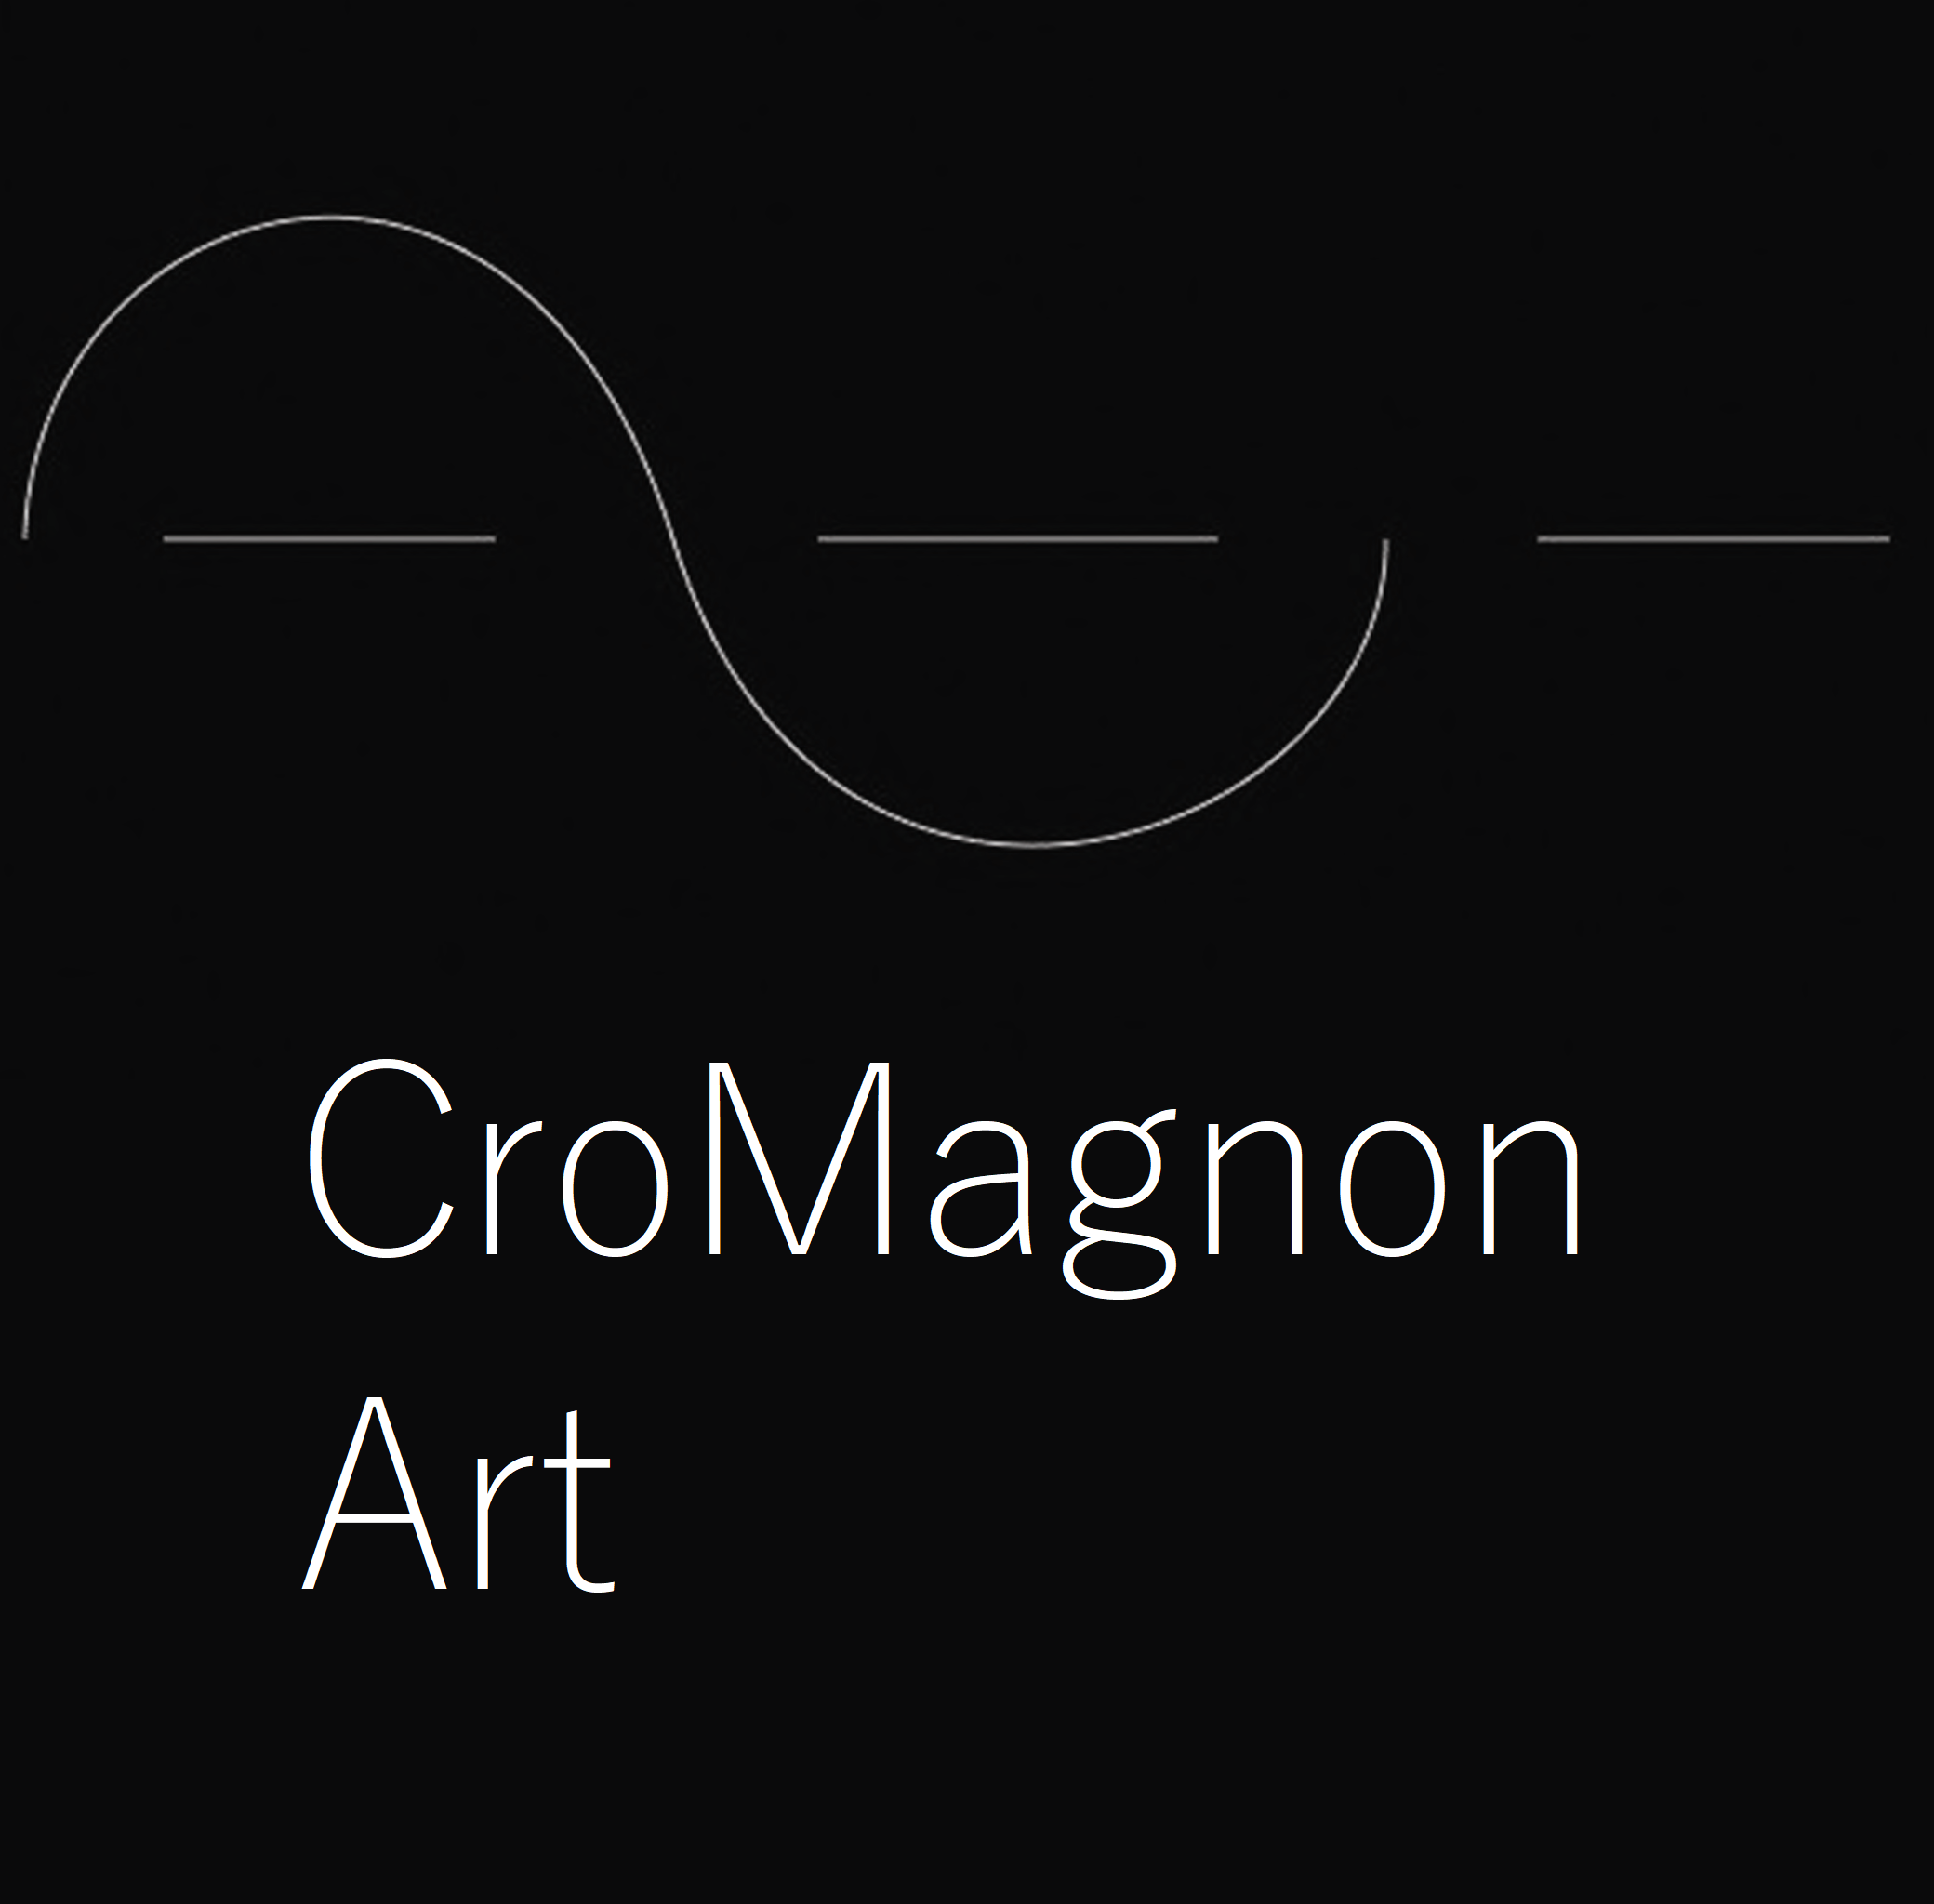 CroMagnon Art